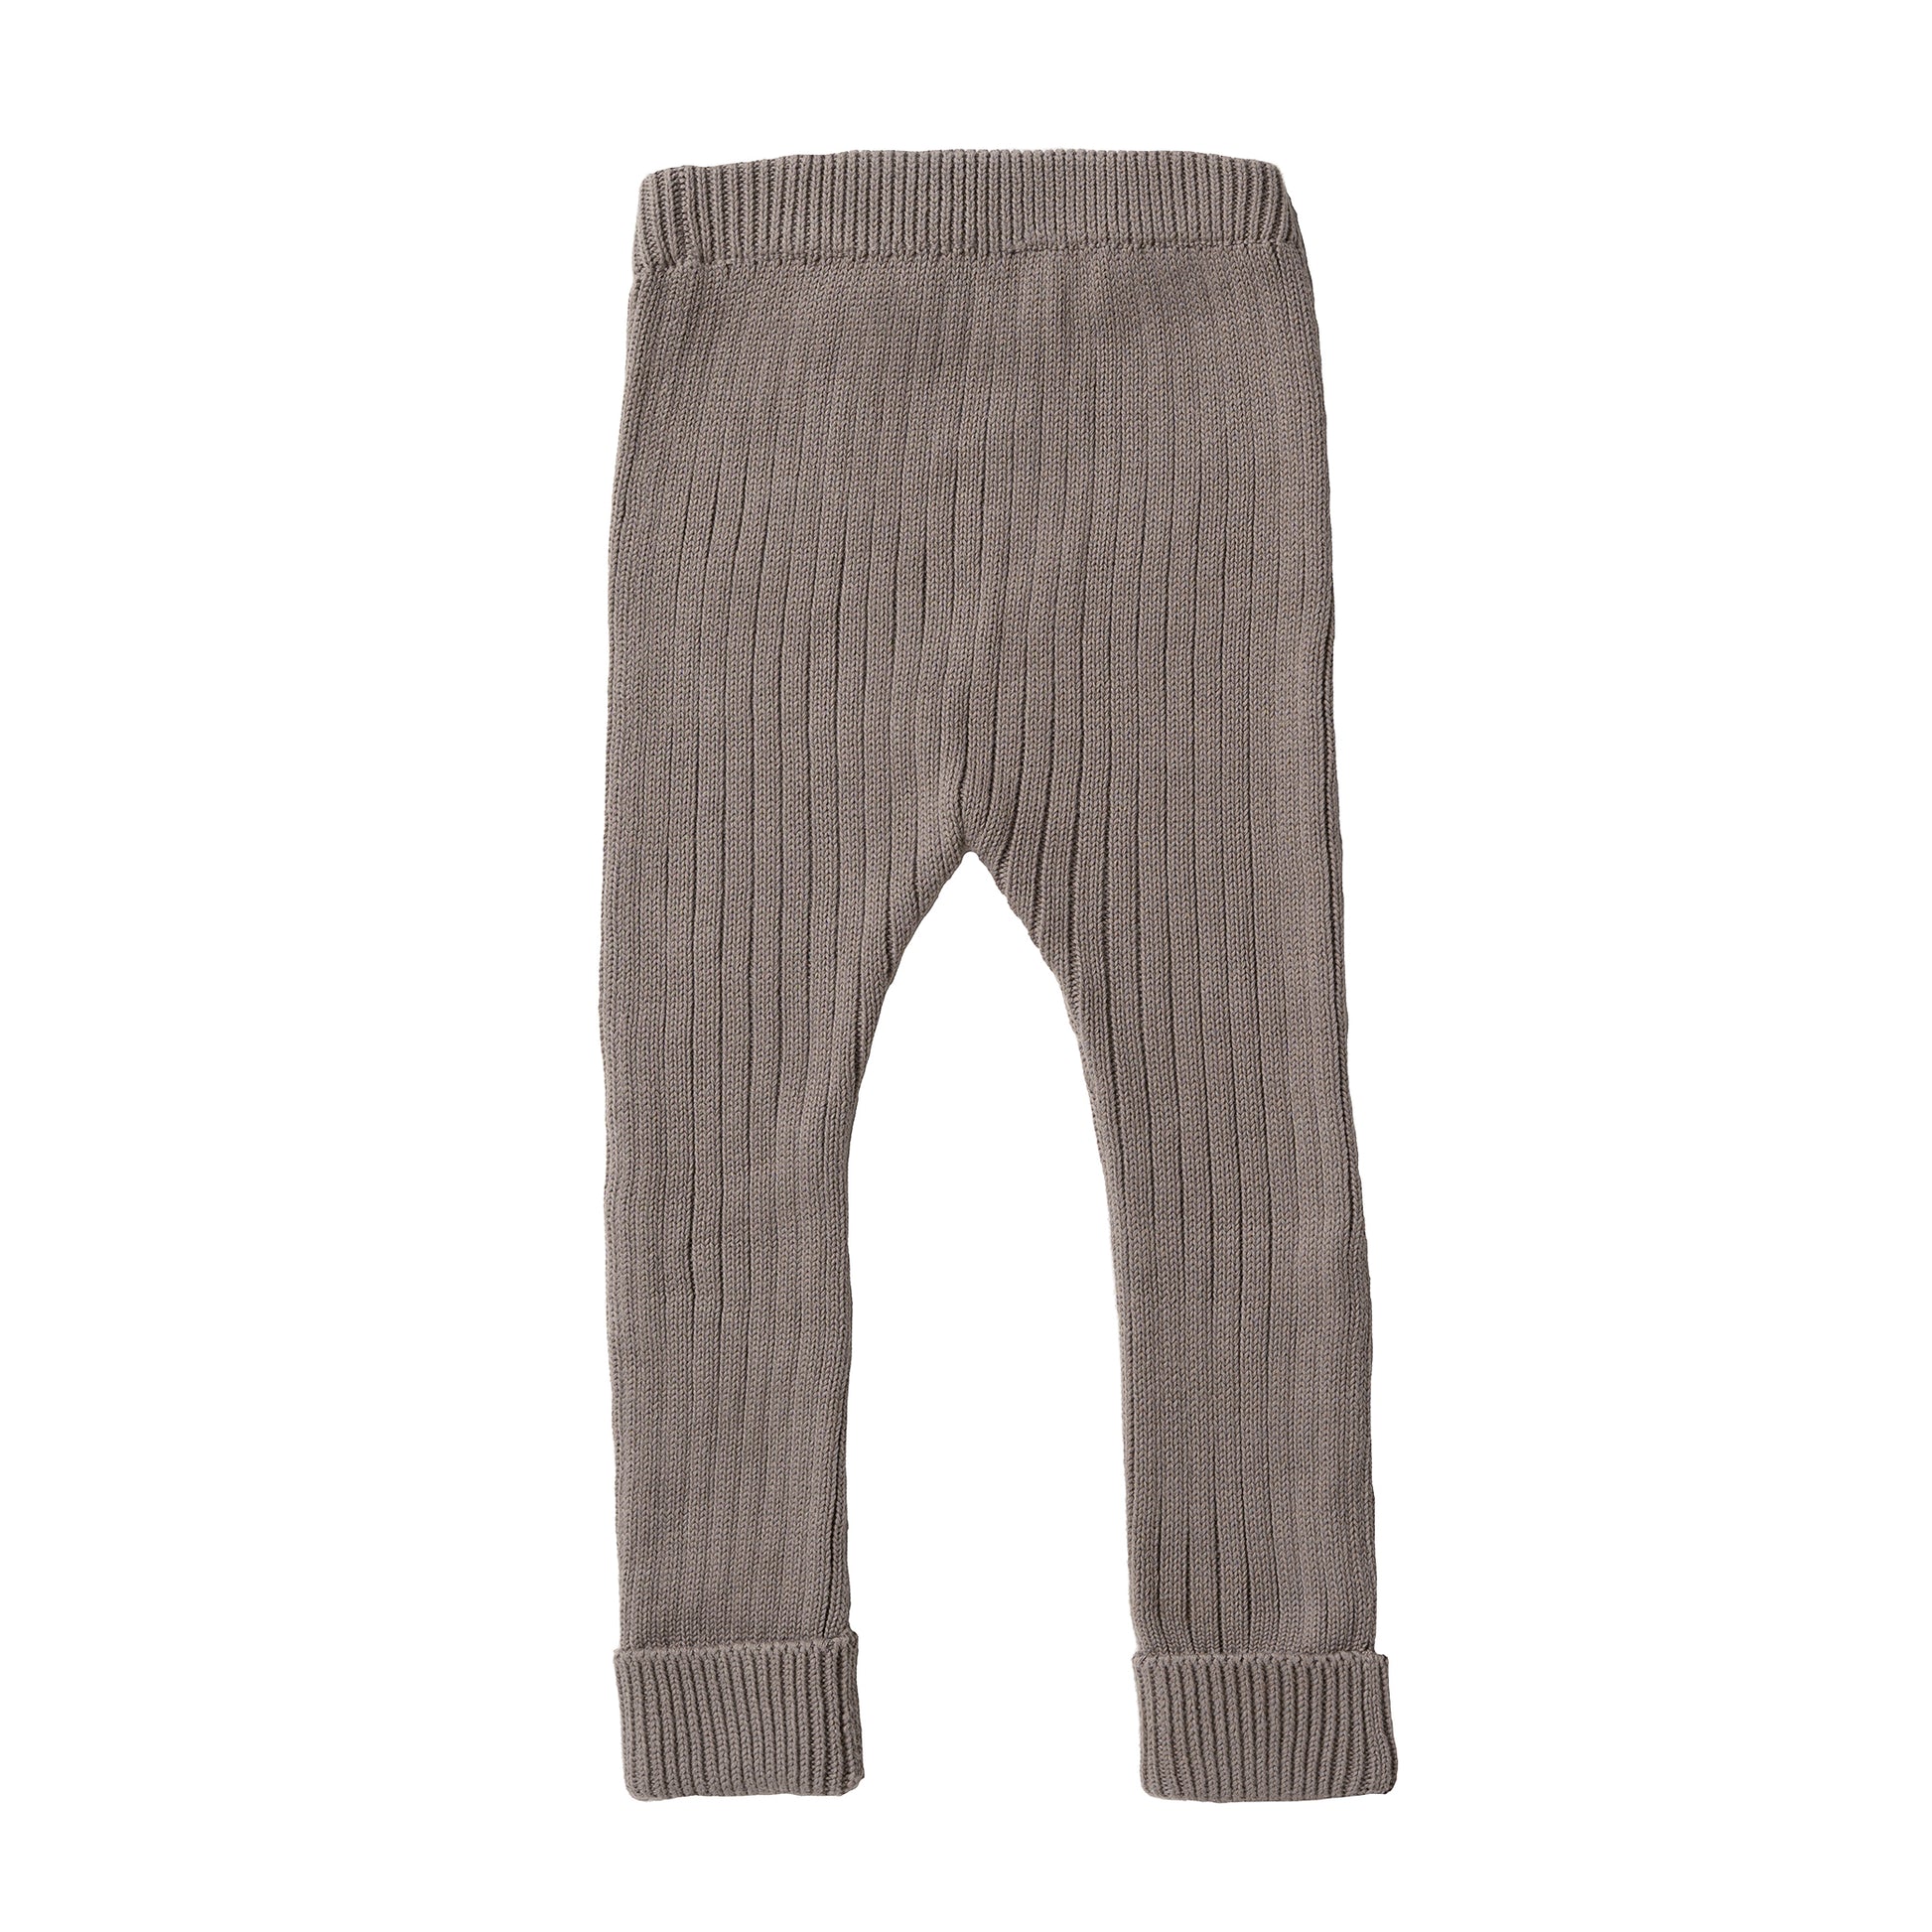 Hanevild Lynge leggings, grey Pants Grey, warm